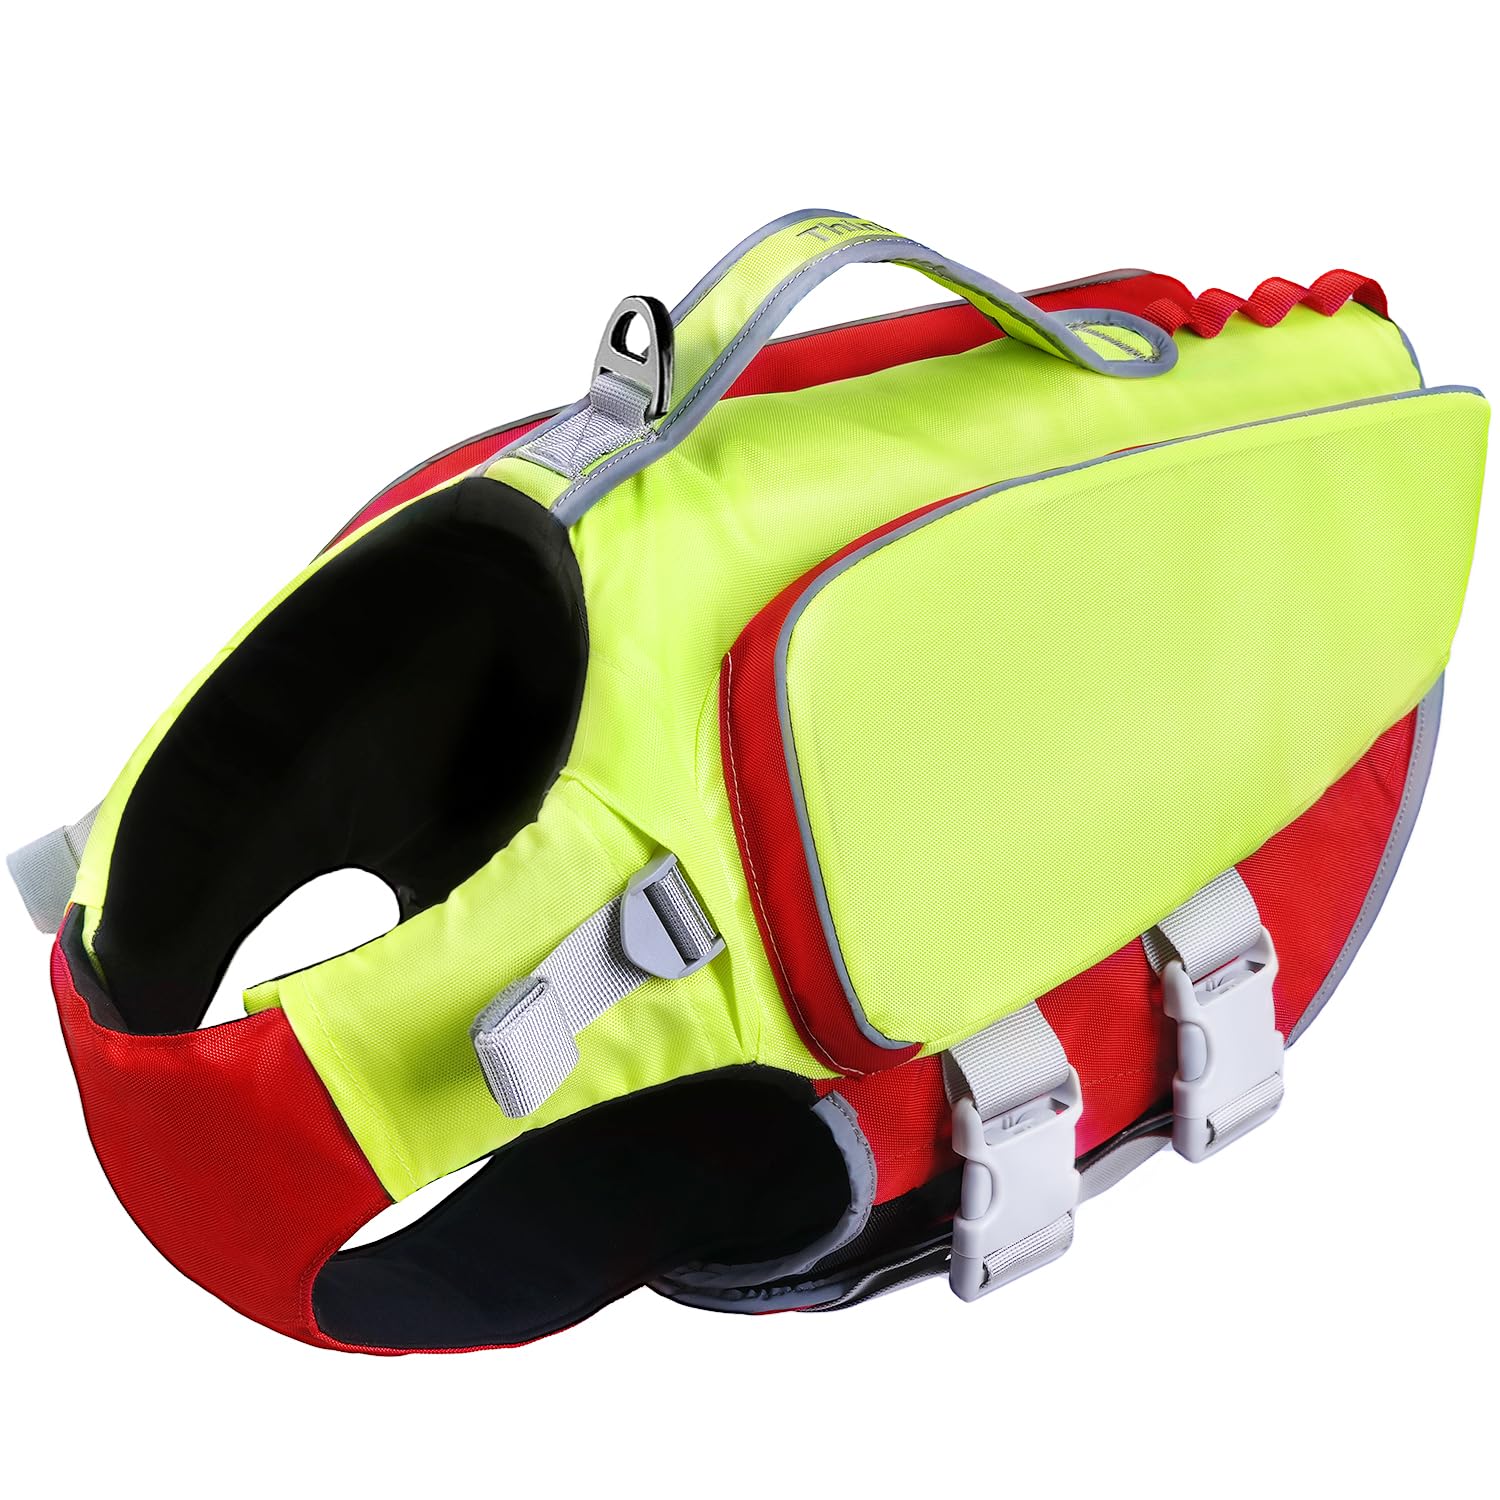 ThinkPetの犬用ライフジャケットハーネス 小型中型大型犬用 反射ベスト ライフジャケット 泳ぎ用 高浮力 調節可能なフローティングベスト救助ハンドル付き 小型 緑と赤の配色